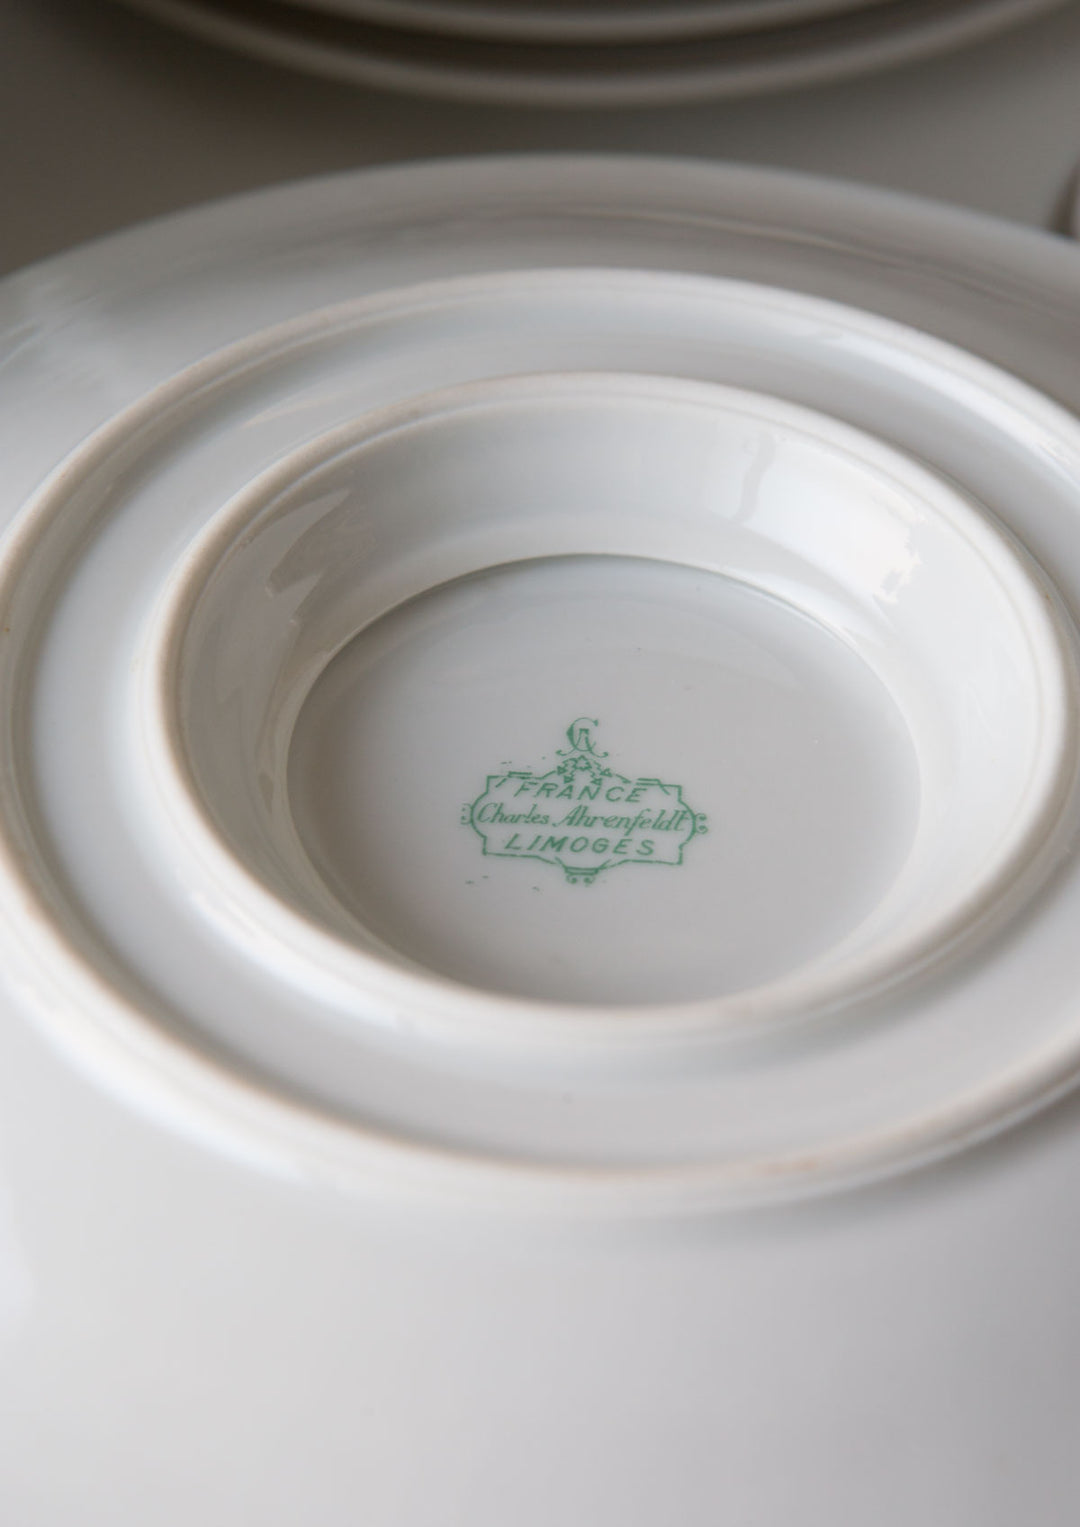 Vajilla francesa porcelana Ch. Ahrenfeldt Limoges (VENDIDA)